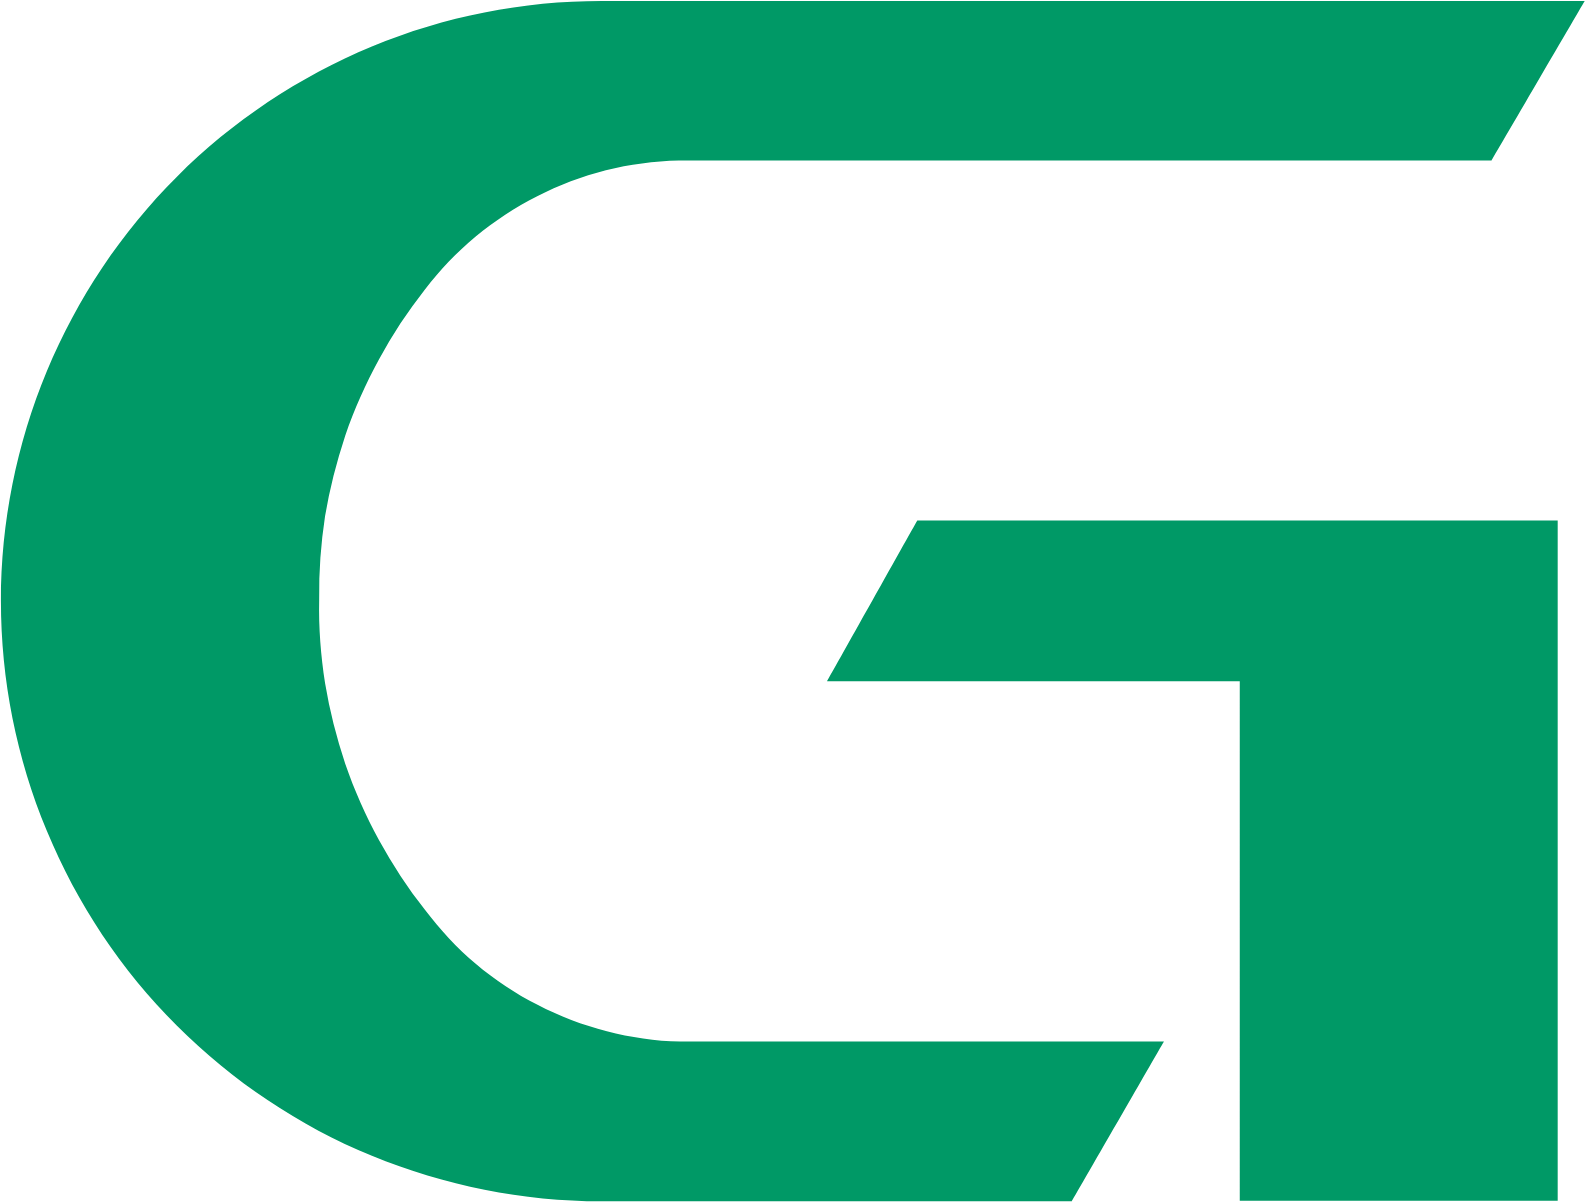 Global Unichip Corp. logo (PNG transparent)